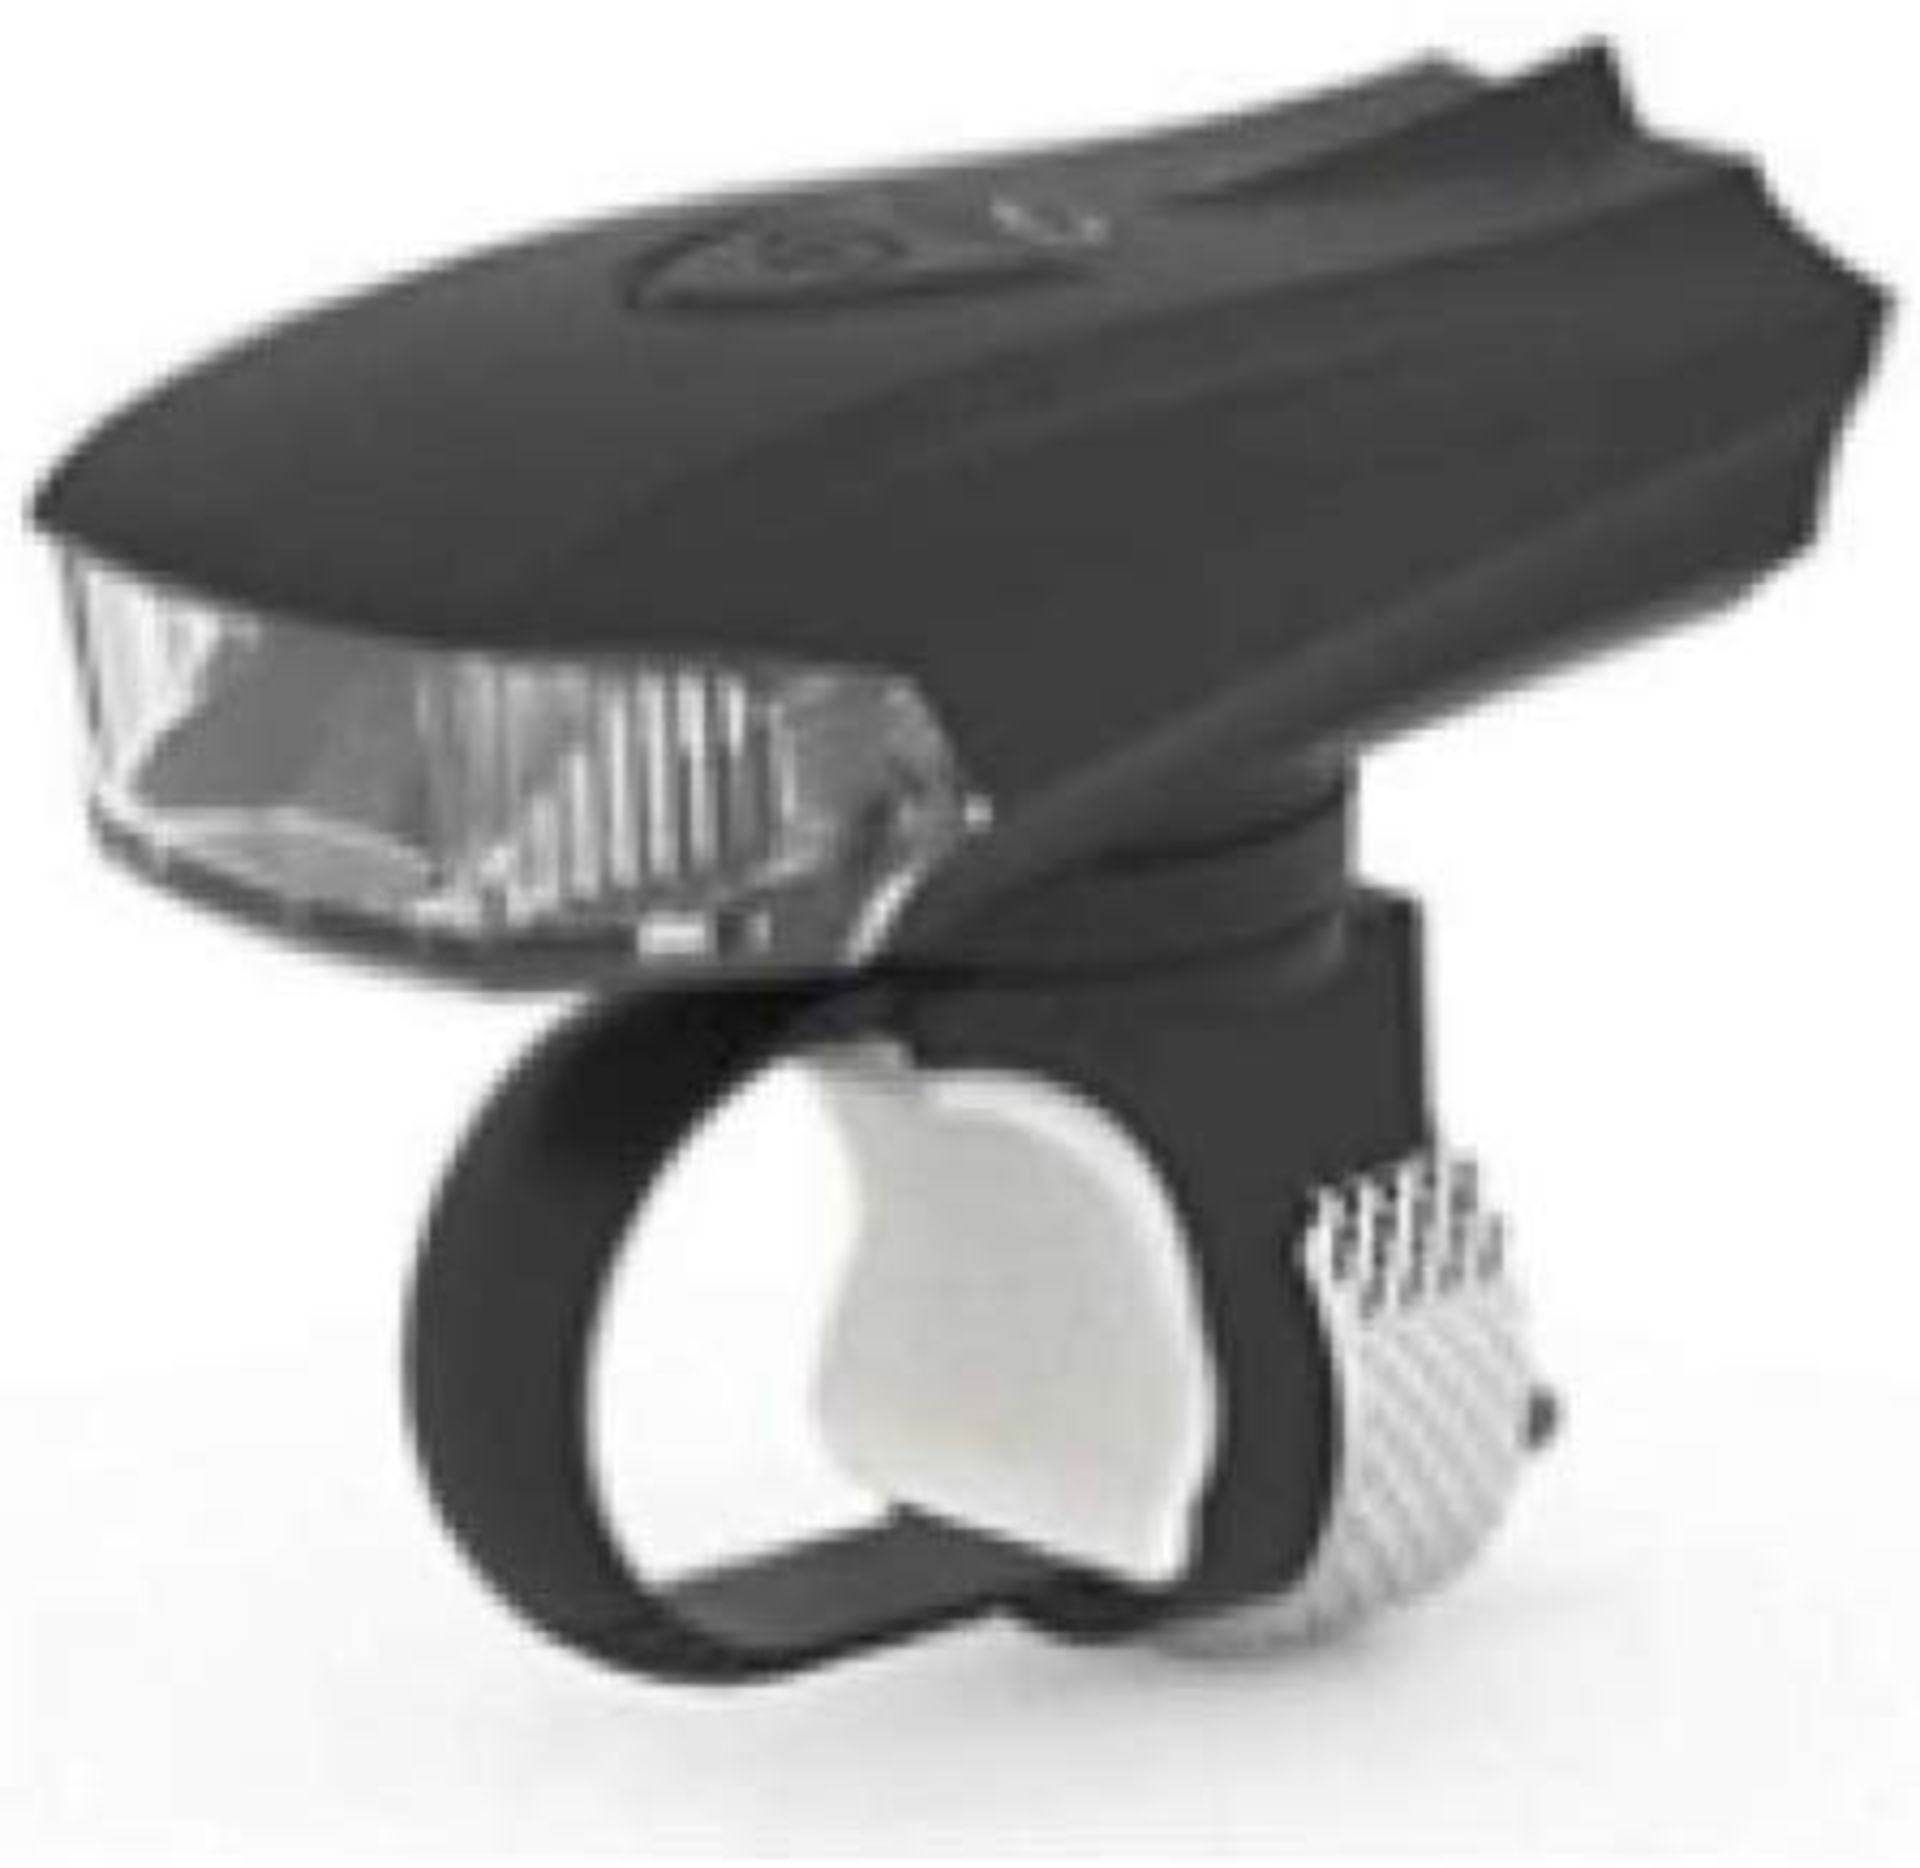 10 x Machfally Smart Bicycle Sensor Warning Light Shock Sensor LED